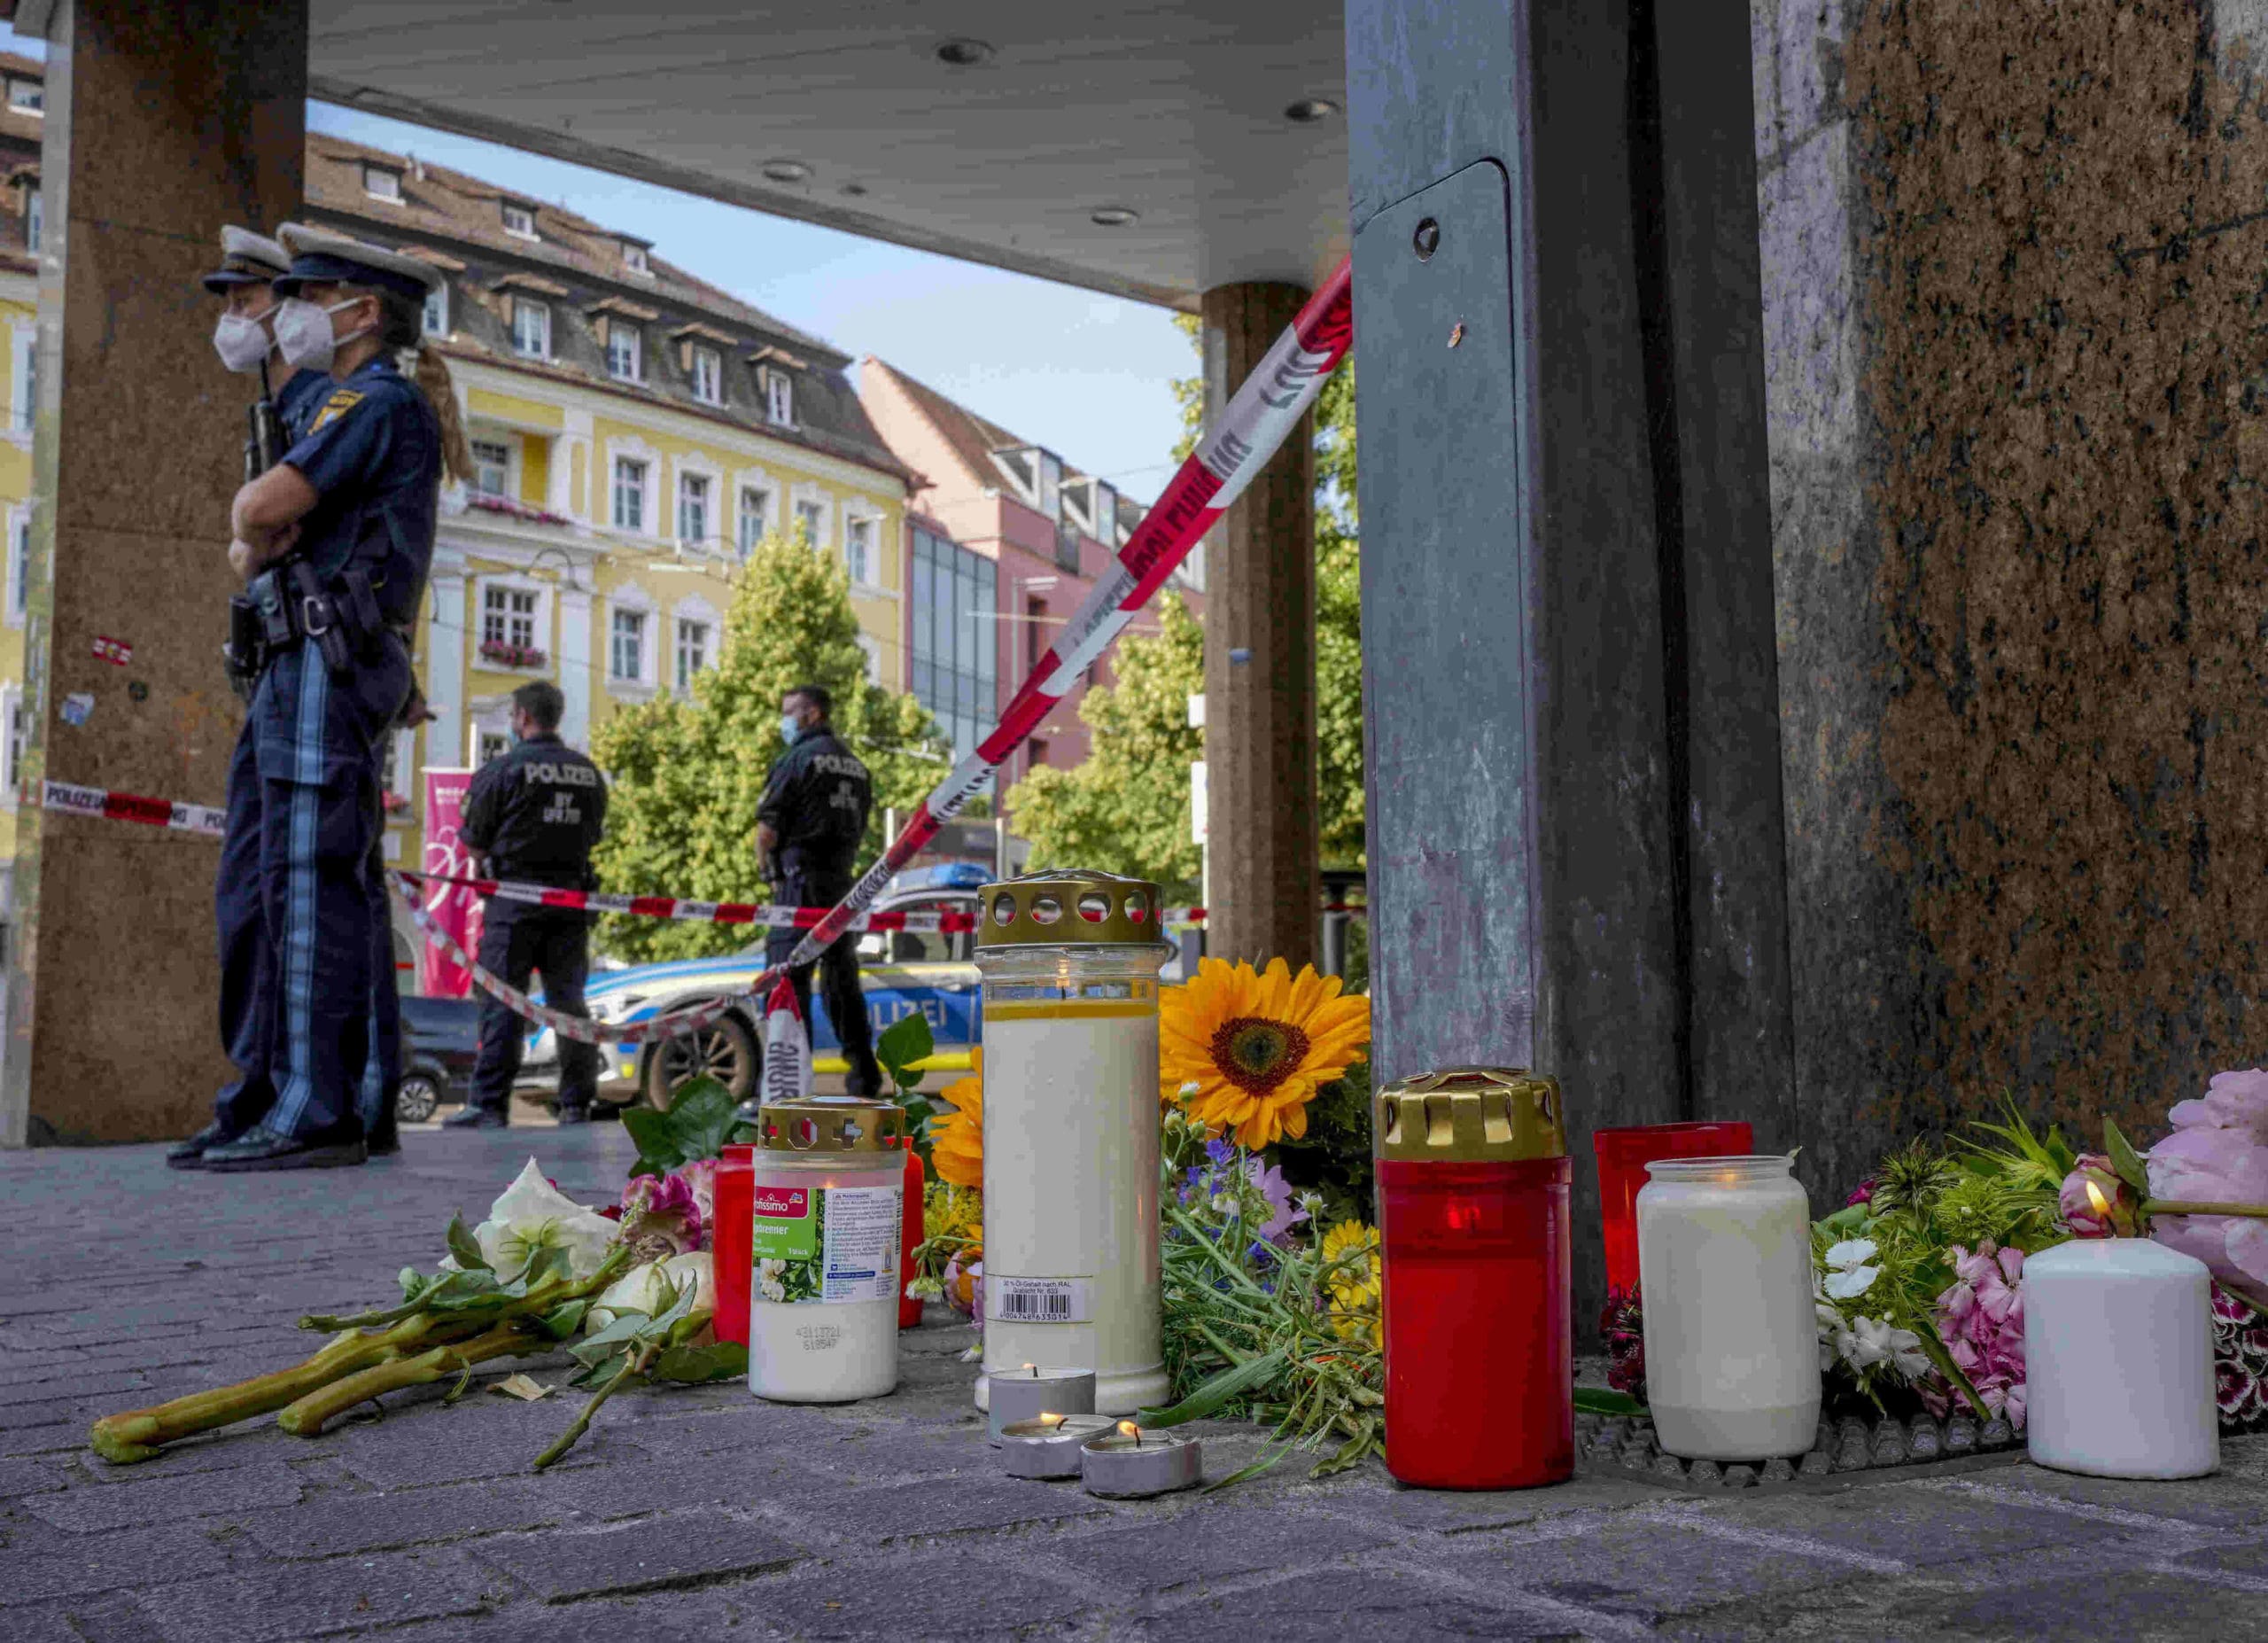 Germany, knife attacks, migrants